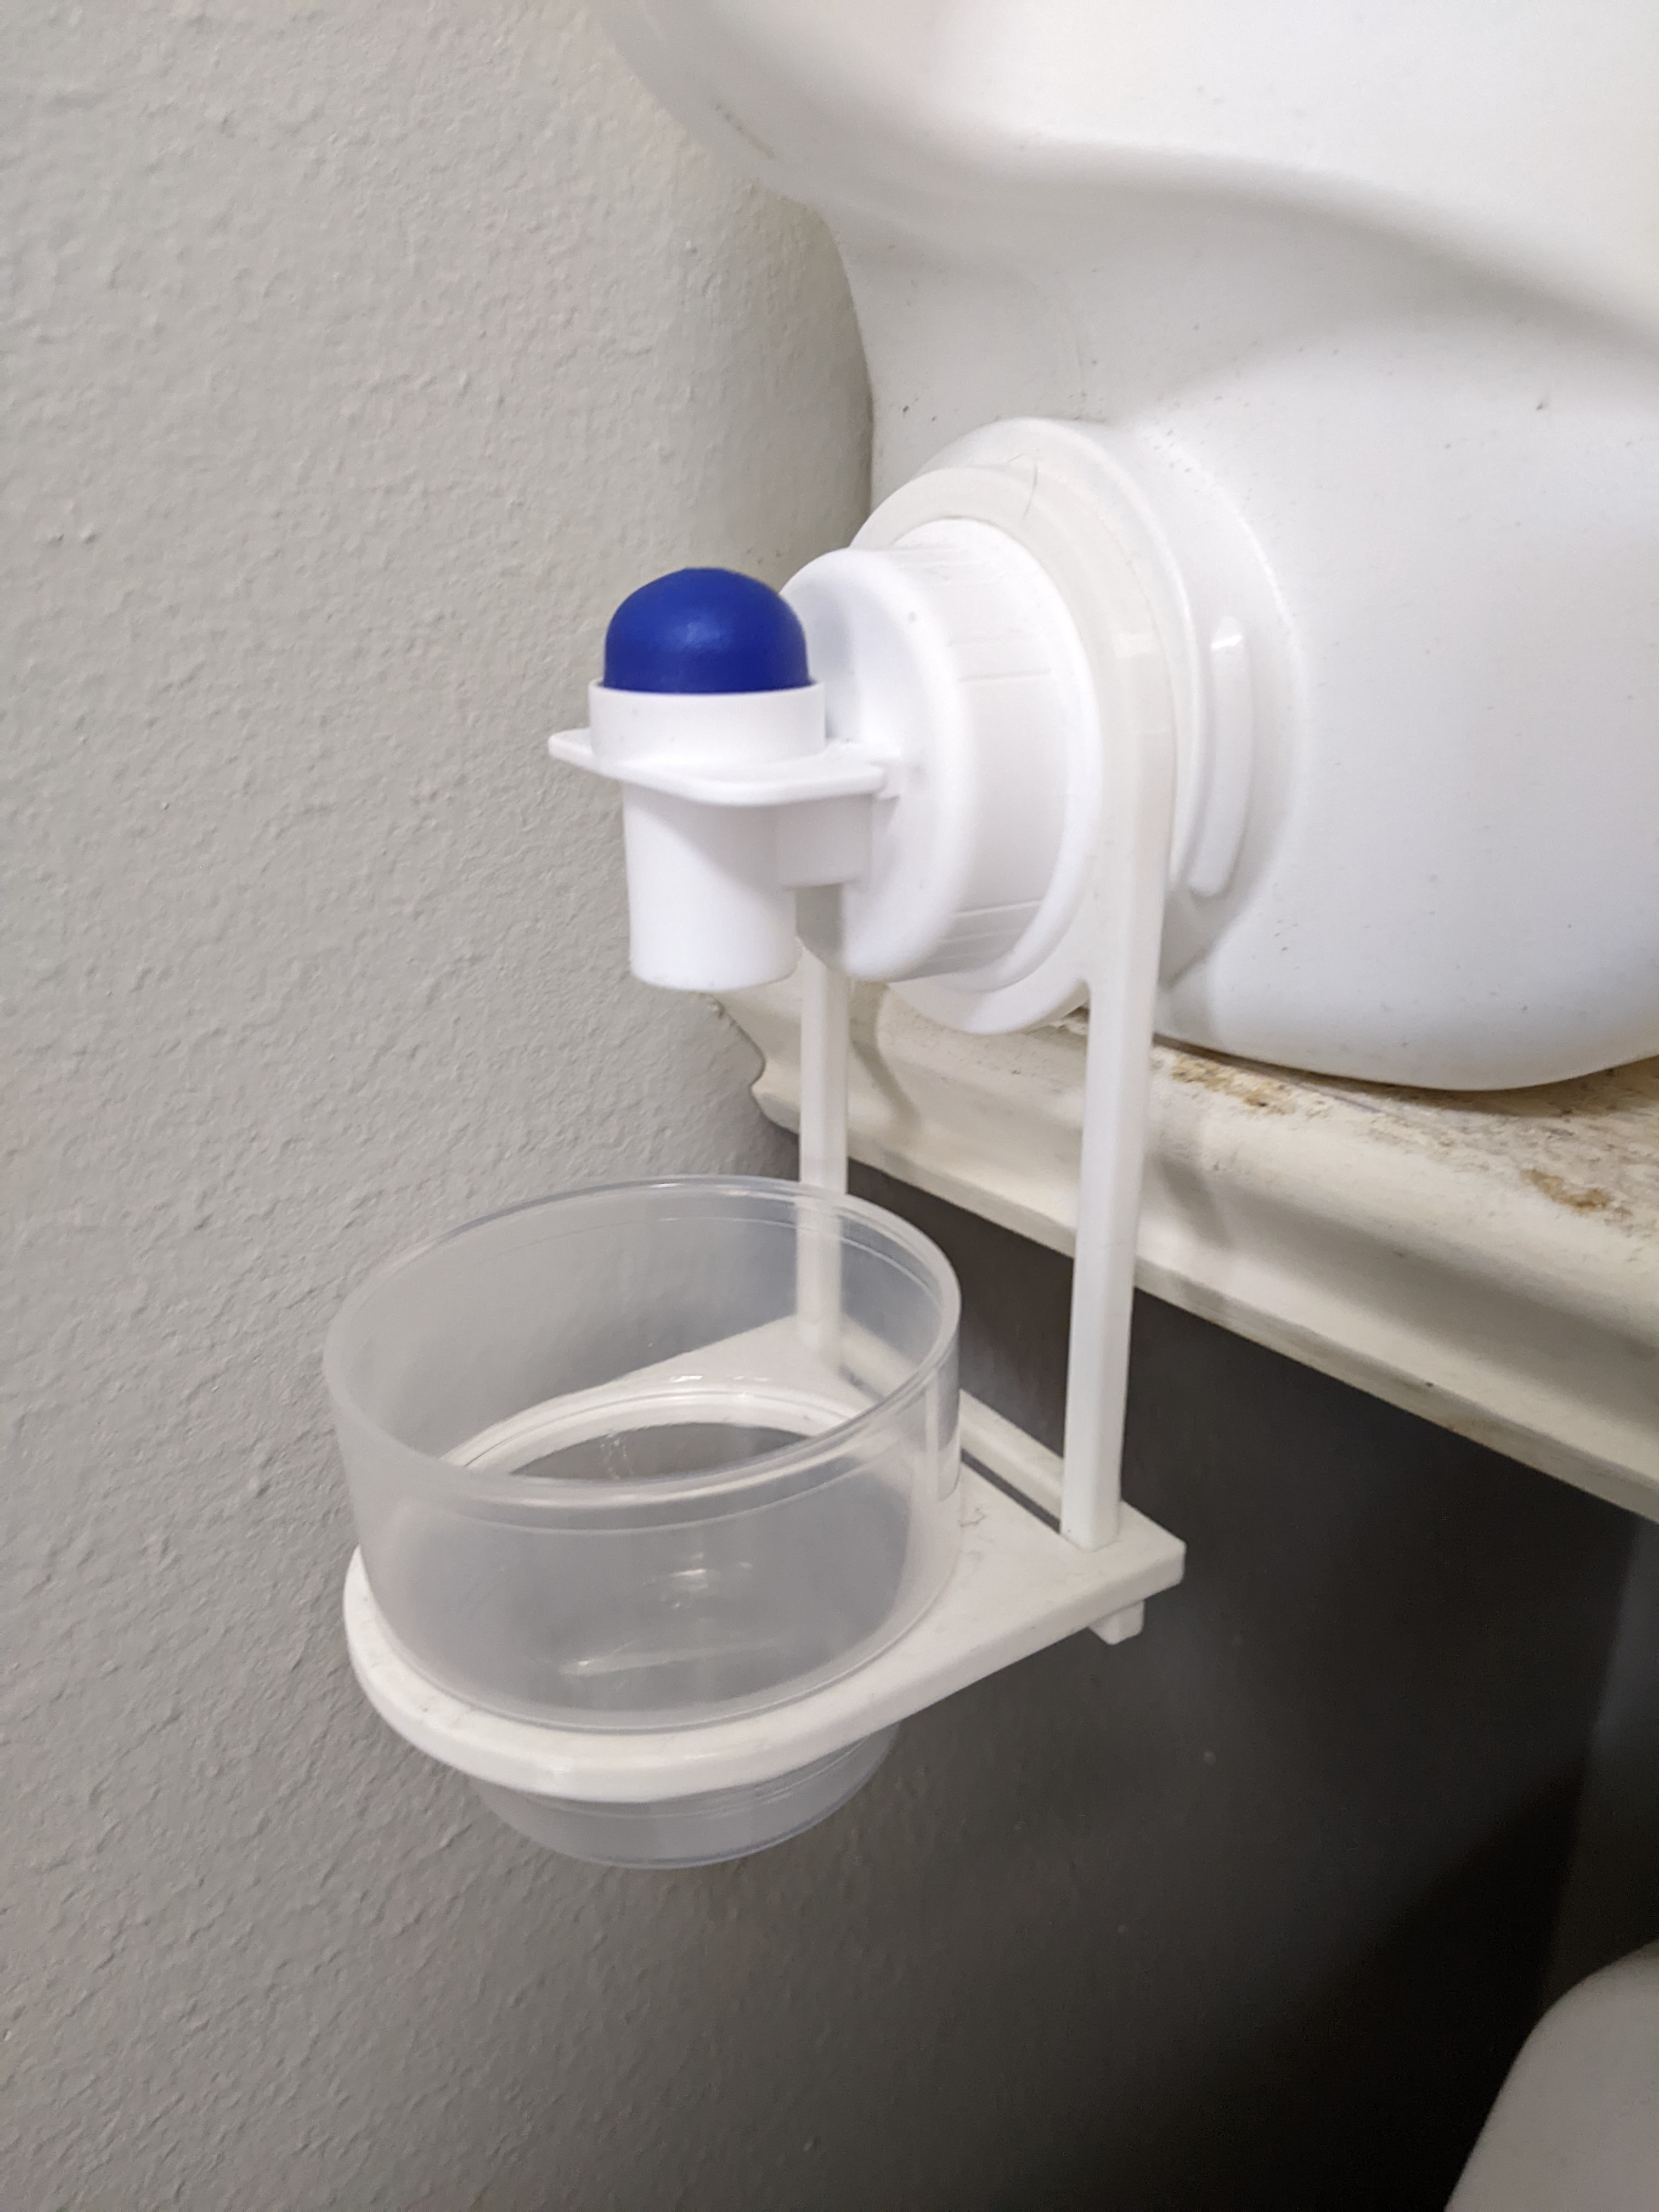 Parametric Laundry Detergent Cup Holder